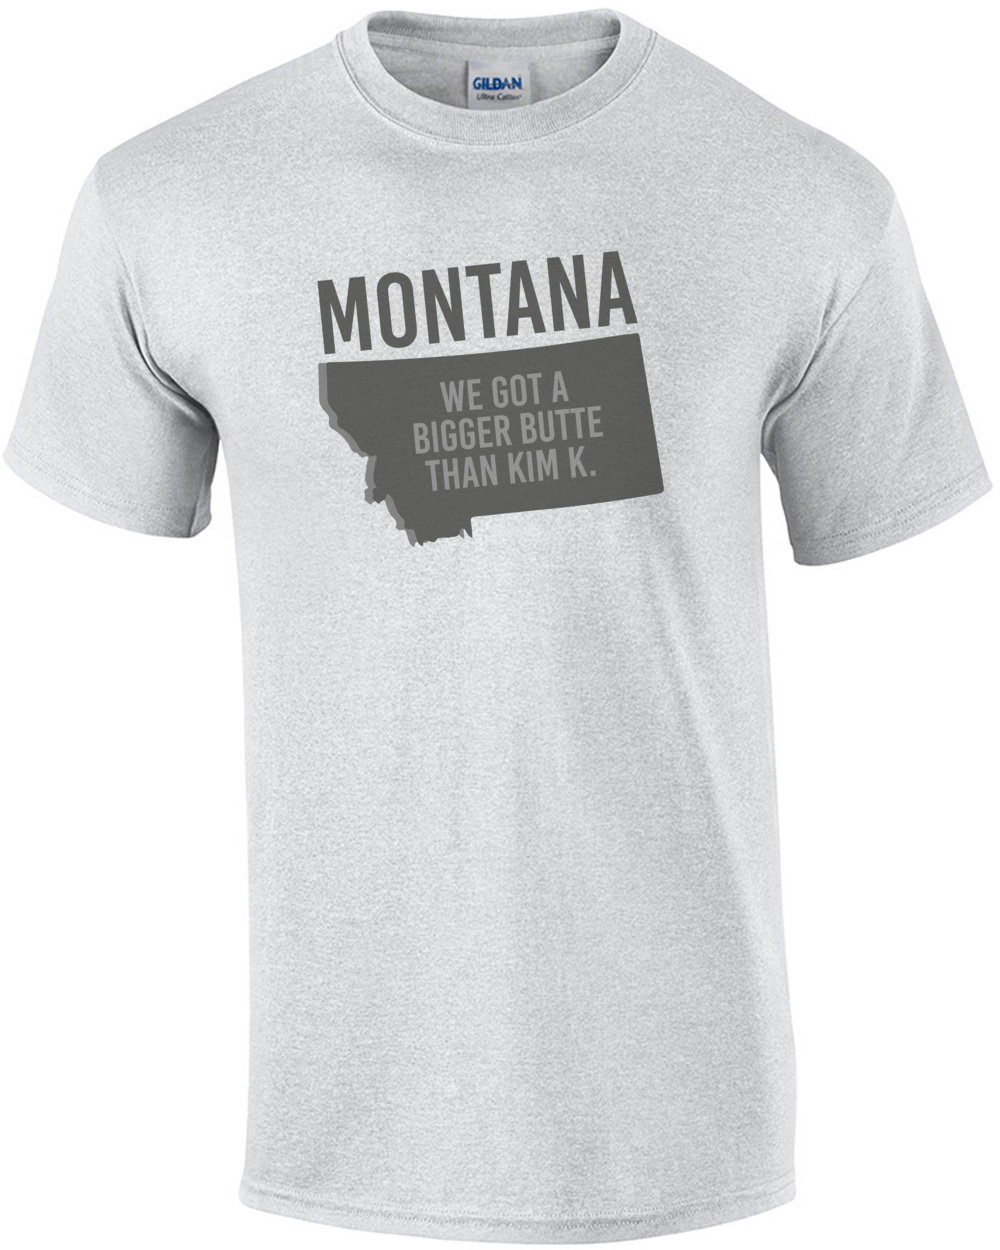 Montana State Bigger Butte Than Kim K Boys Cotton Long Sleeve Tshirt